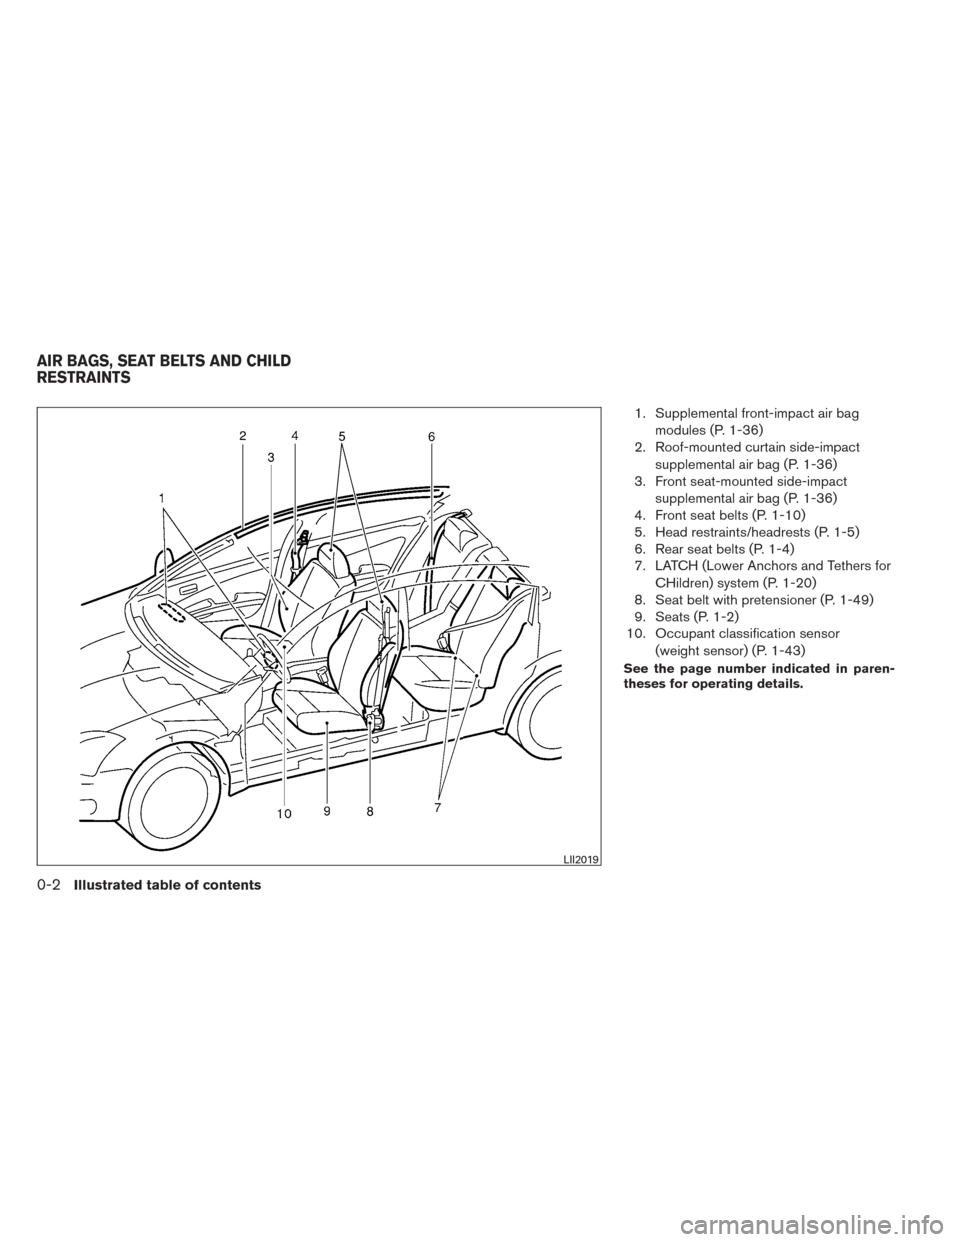 NISSAN VERSA SEDAN 2014 2.G Owners Manual 1. Supplemental front-impact air bagmodules (P. 1-36)
2. Roof-mounted curtain side-impact
supplemental air bag (P. 1-36)
3. Front seat-mounted side-impact
supplemental air bag (P. 1-36)
4. Front seat 